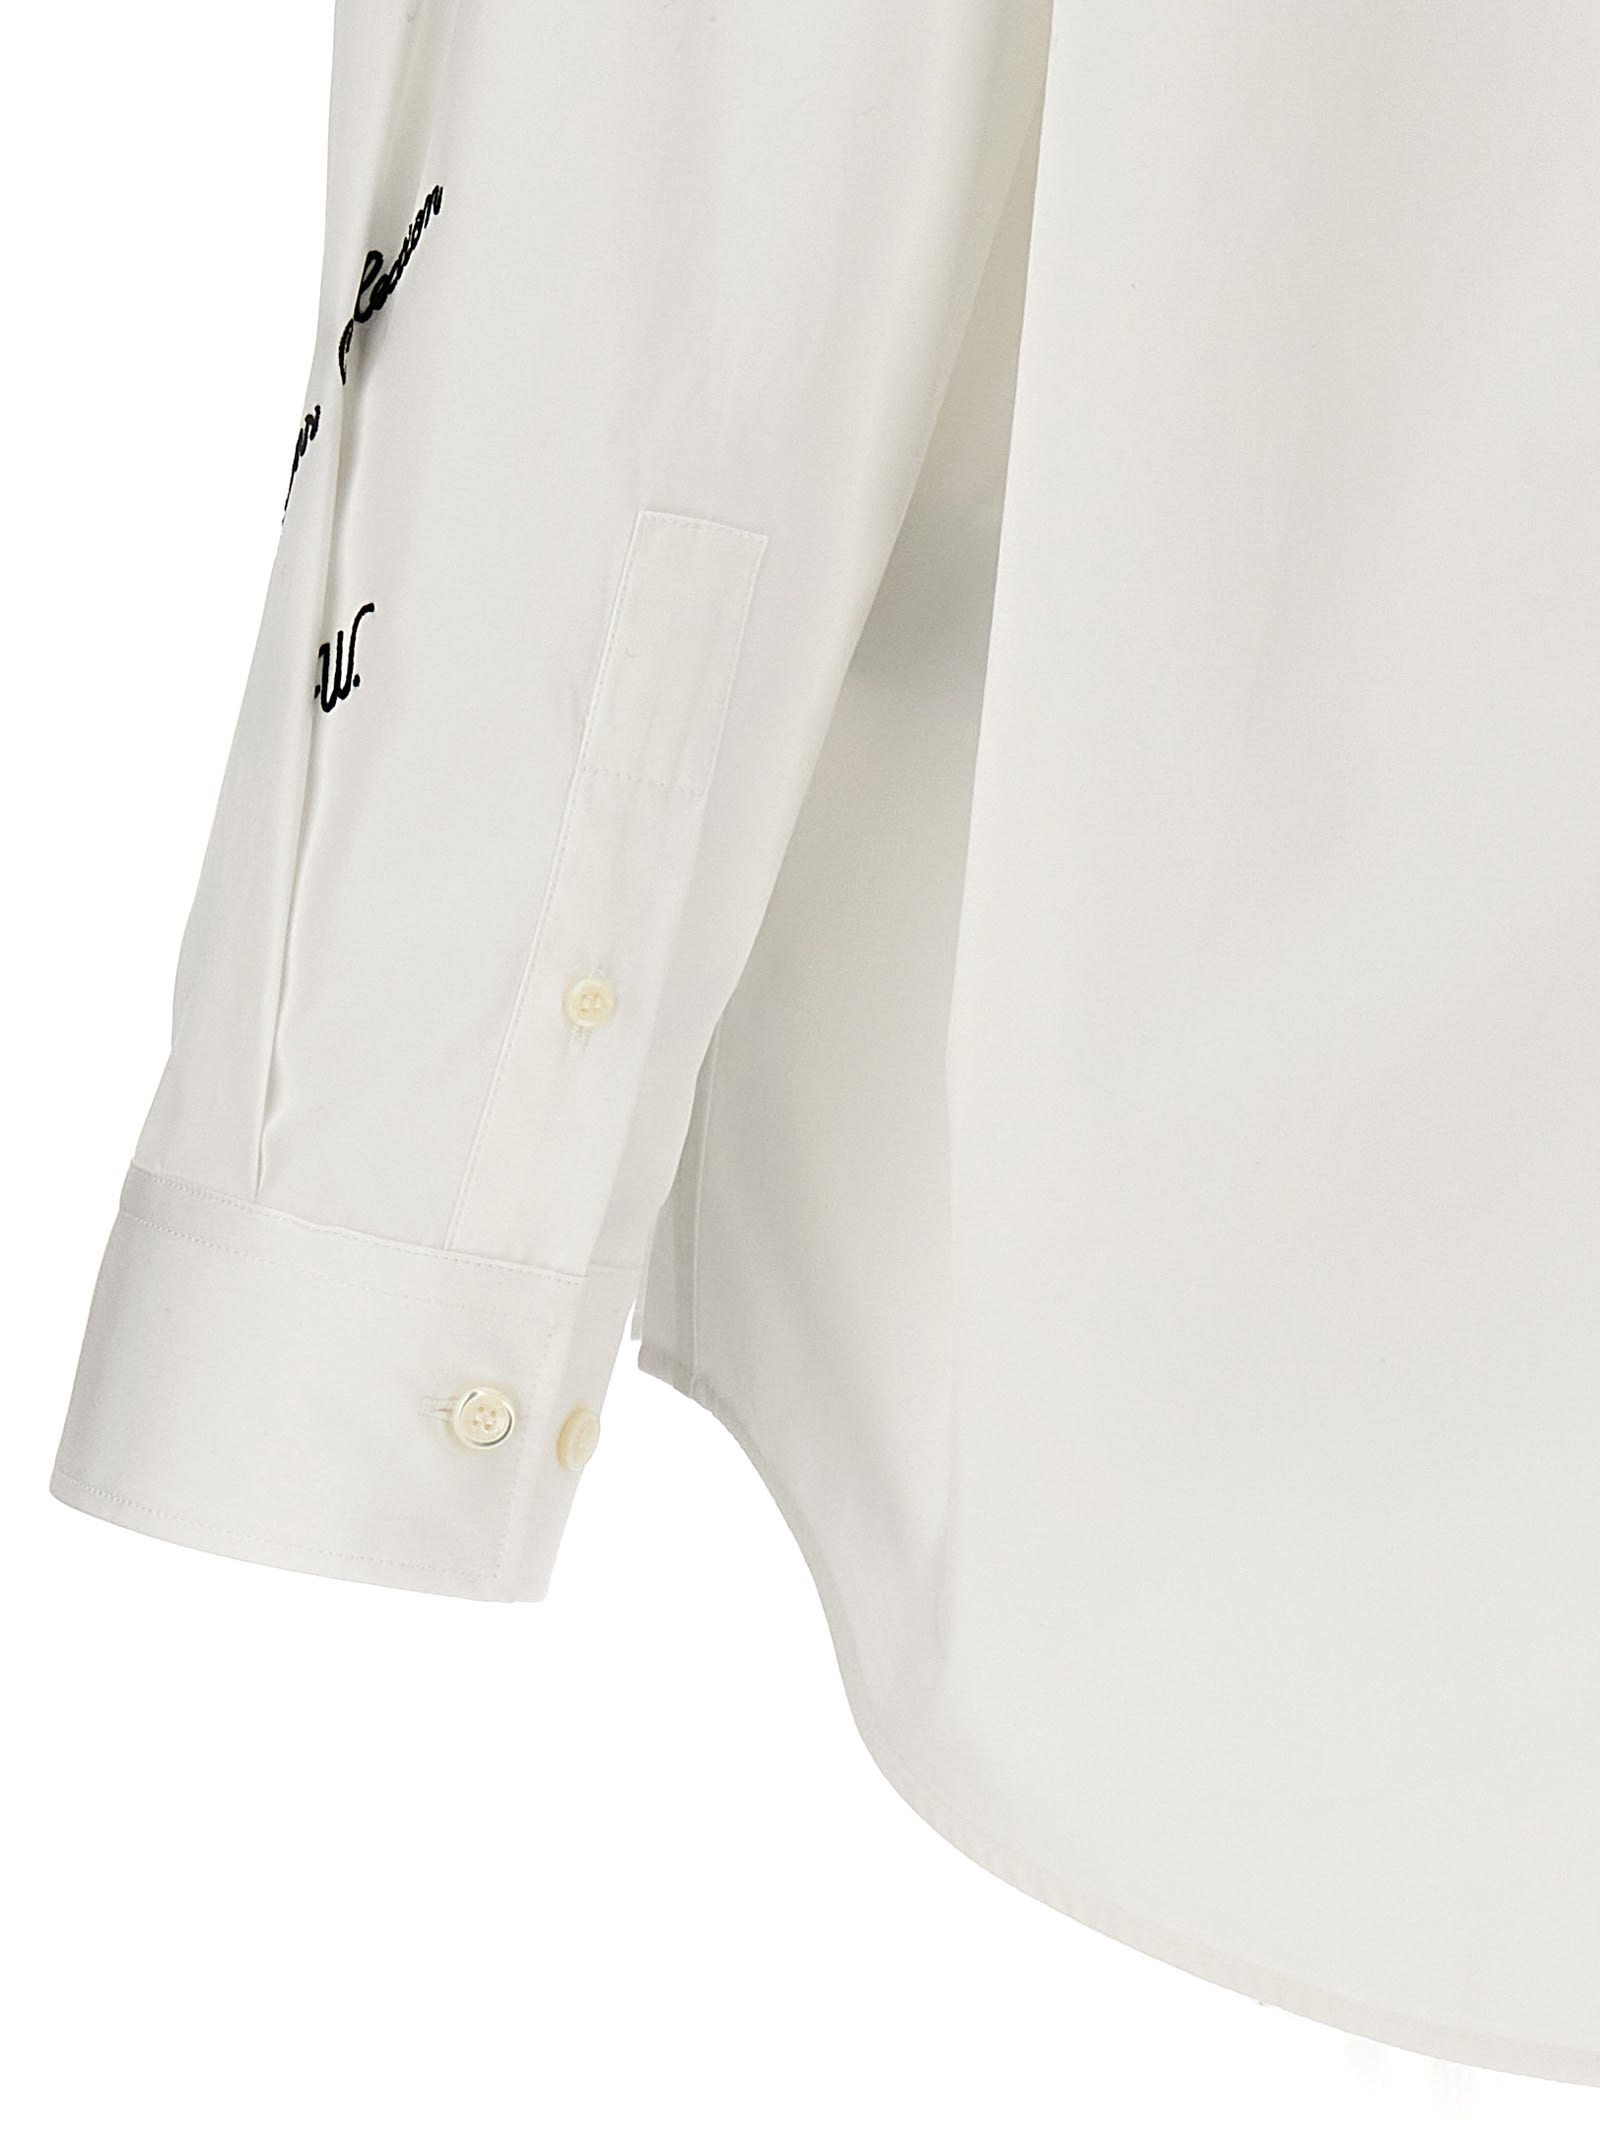 Shop Off-white 23 Logo Heavycoat Shirt In White/black